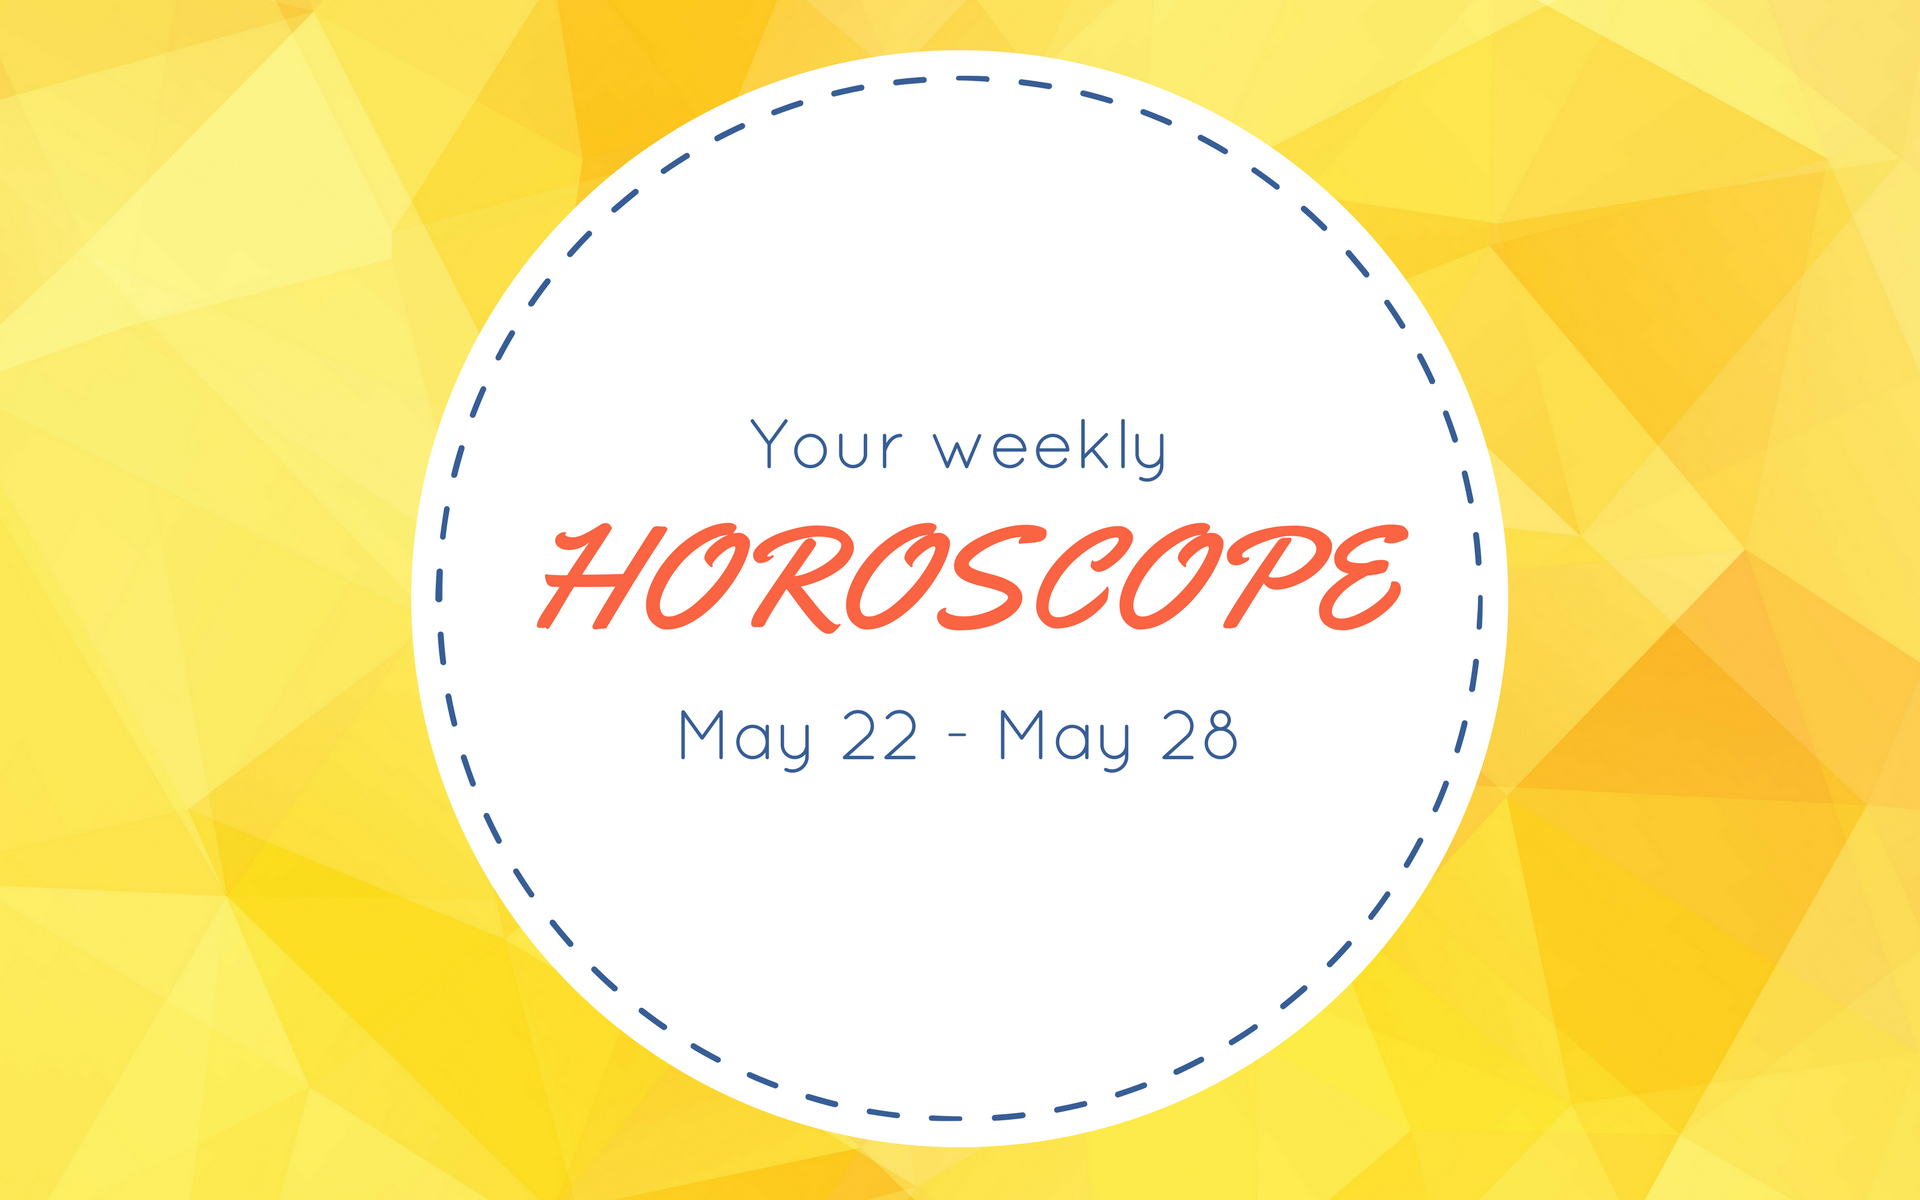 Your Weekly Horoscope: May 22 - May 28